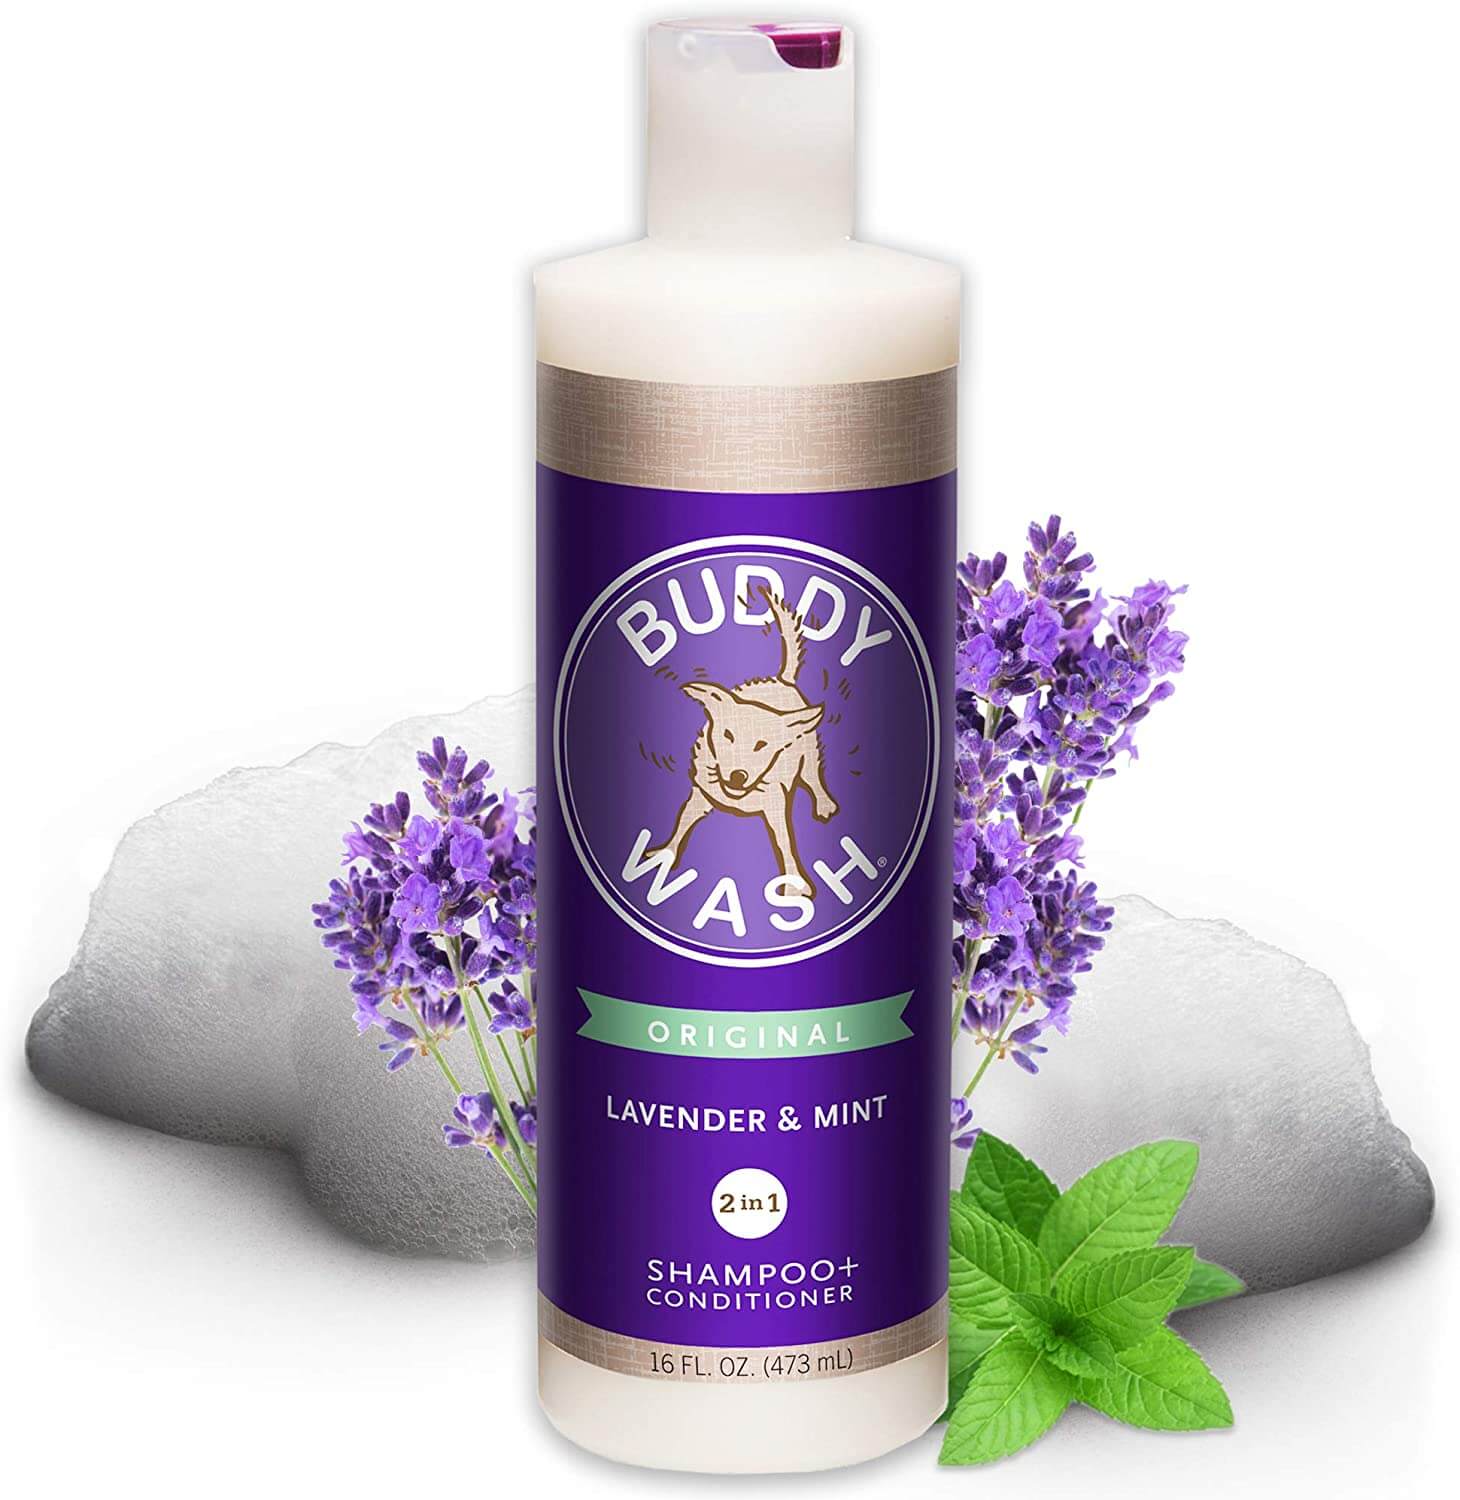 Buddy Wash Original Lavender & Mint Shampoo and Conditioner 